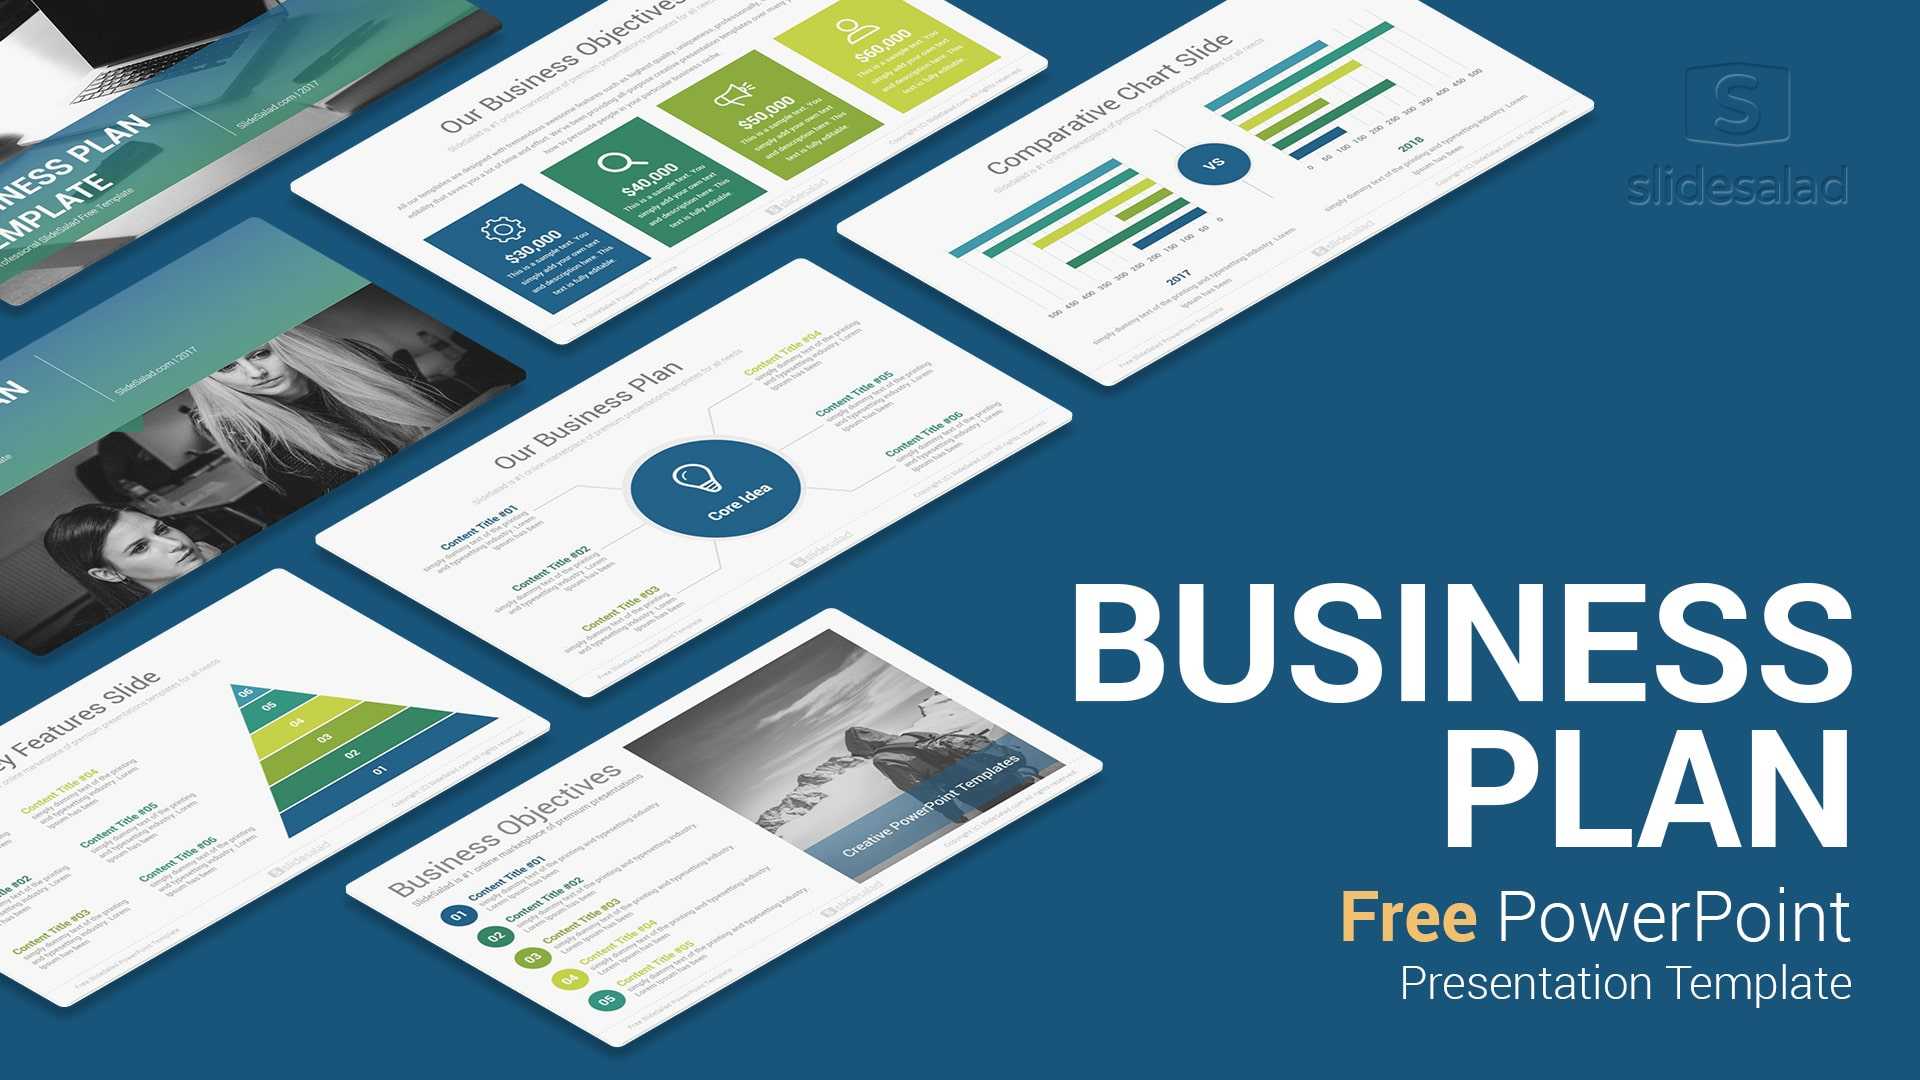 Business Plan Free Powerpoint Presentation Template – Slidesalad Inside Business Card Template Powerpoint Free